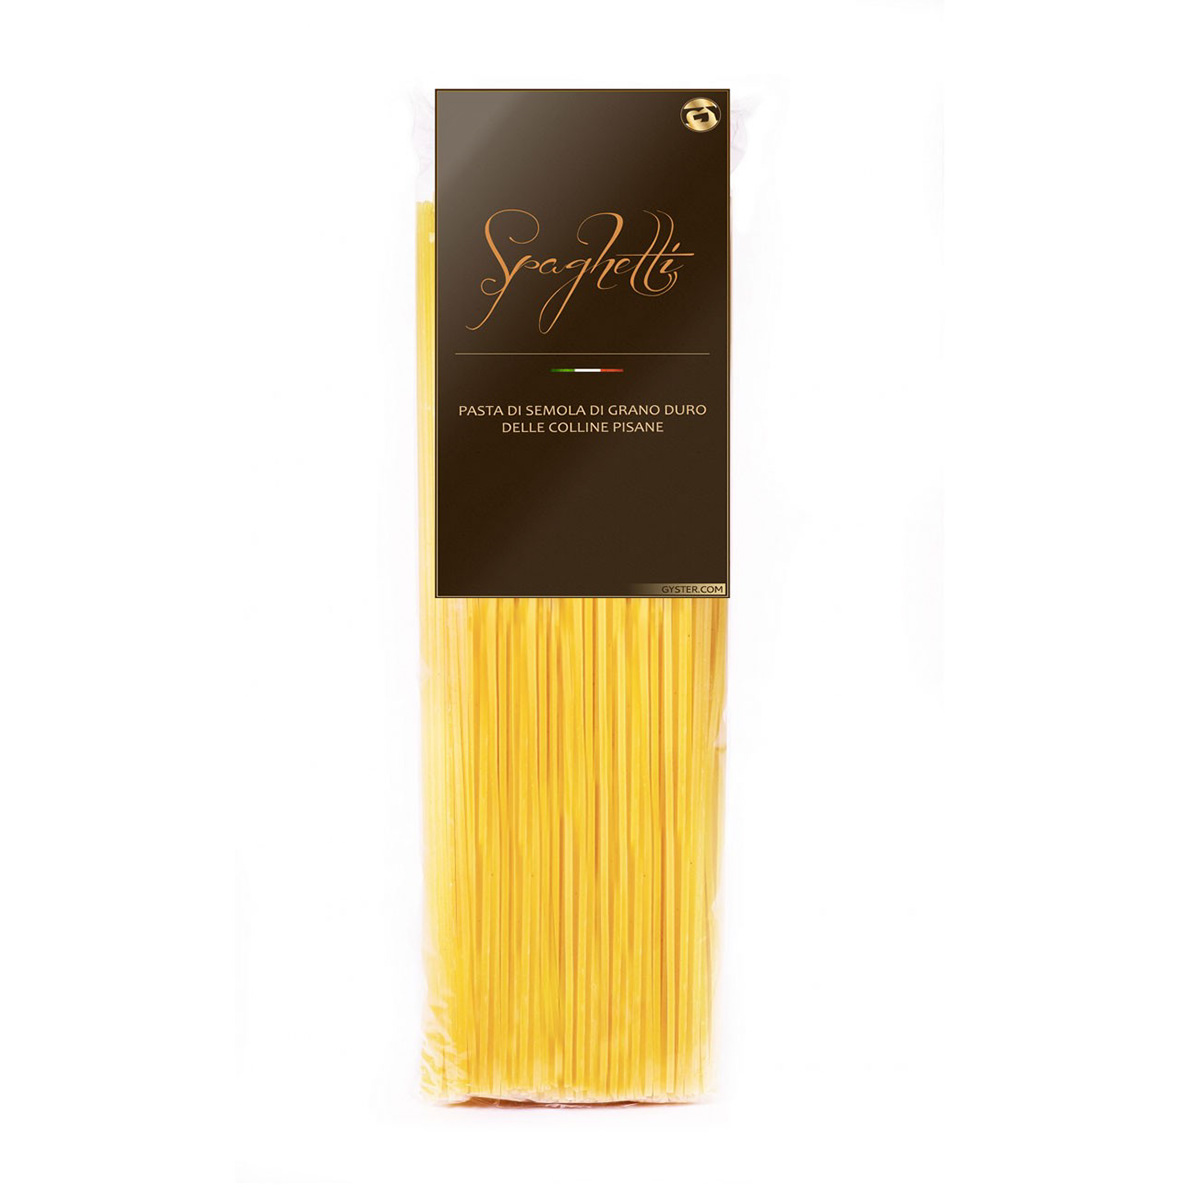 pasta italian style Pasta mockup pasta etichetta pasta scratch scratch pasta